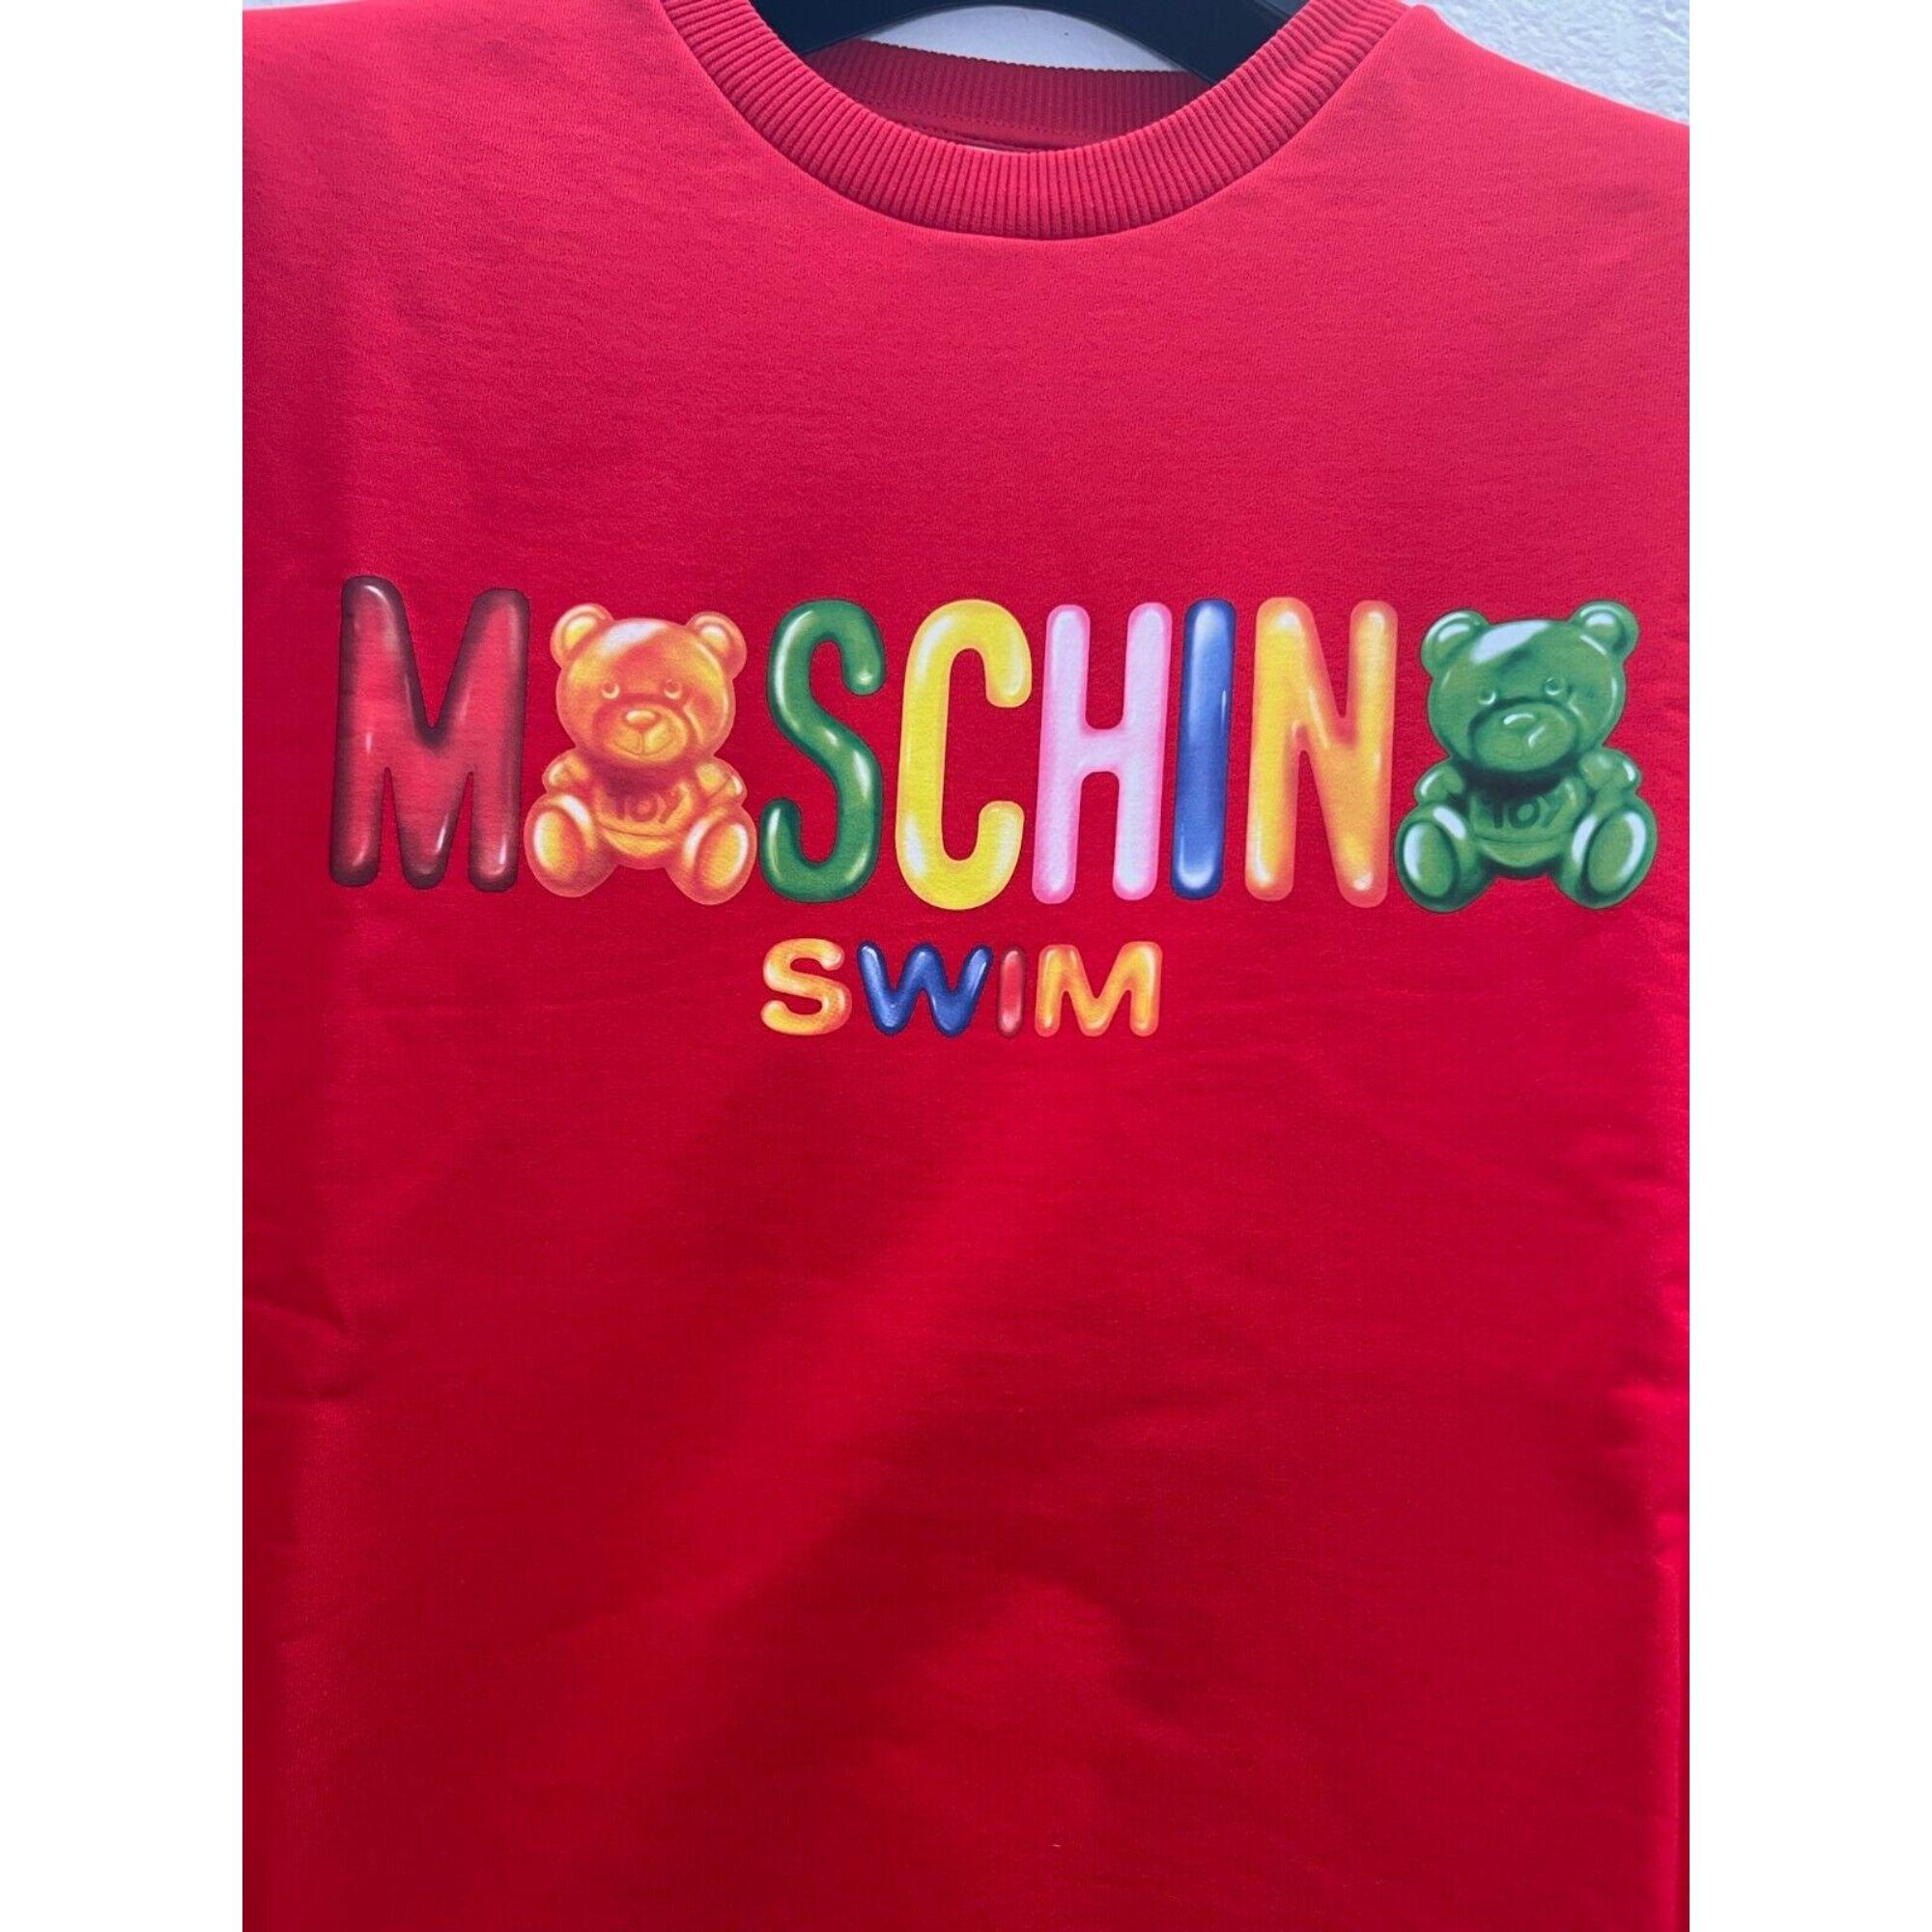 SS19 Moschino Swim Jelly Gummy Teddy Bear Sweatshirt by Jeremy Scott, Size M In New Condition For Sale In Palm Springs, CA